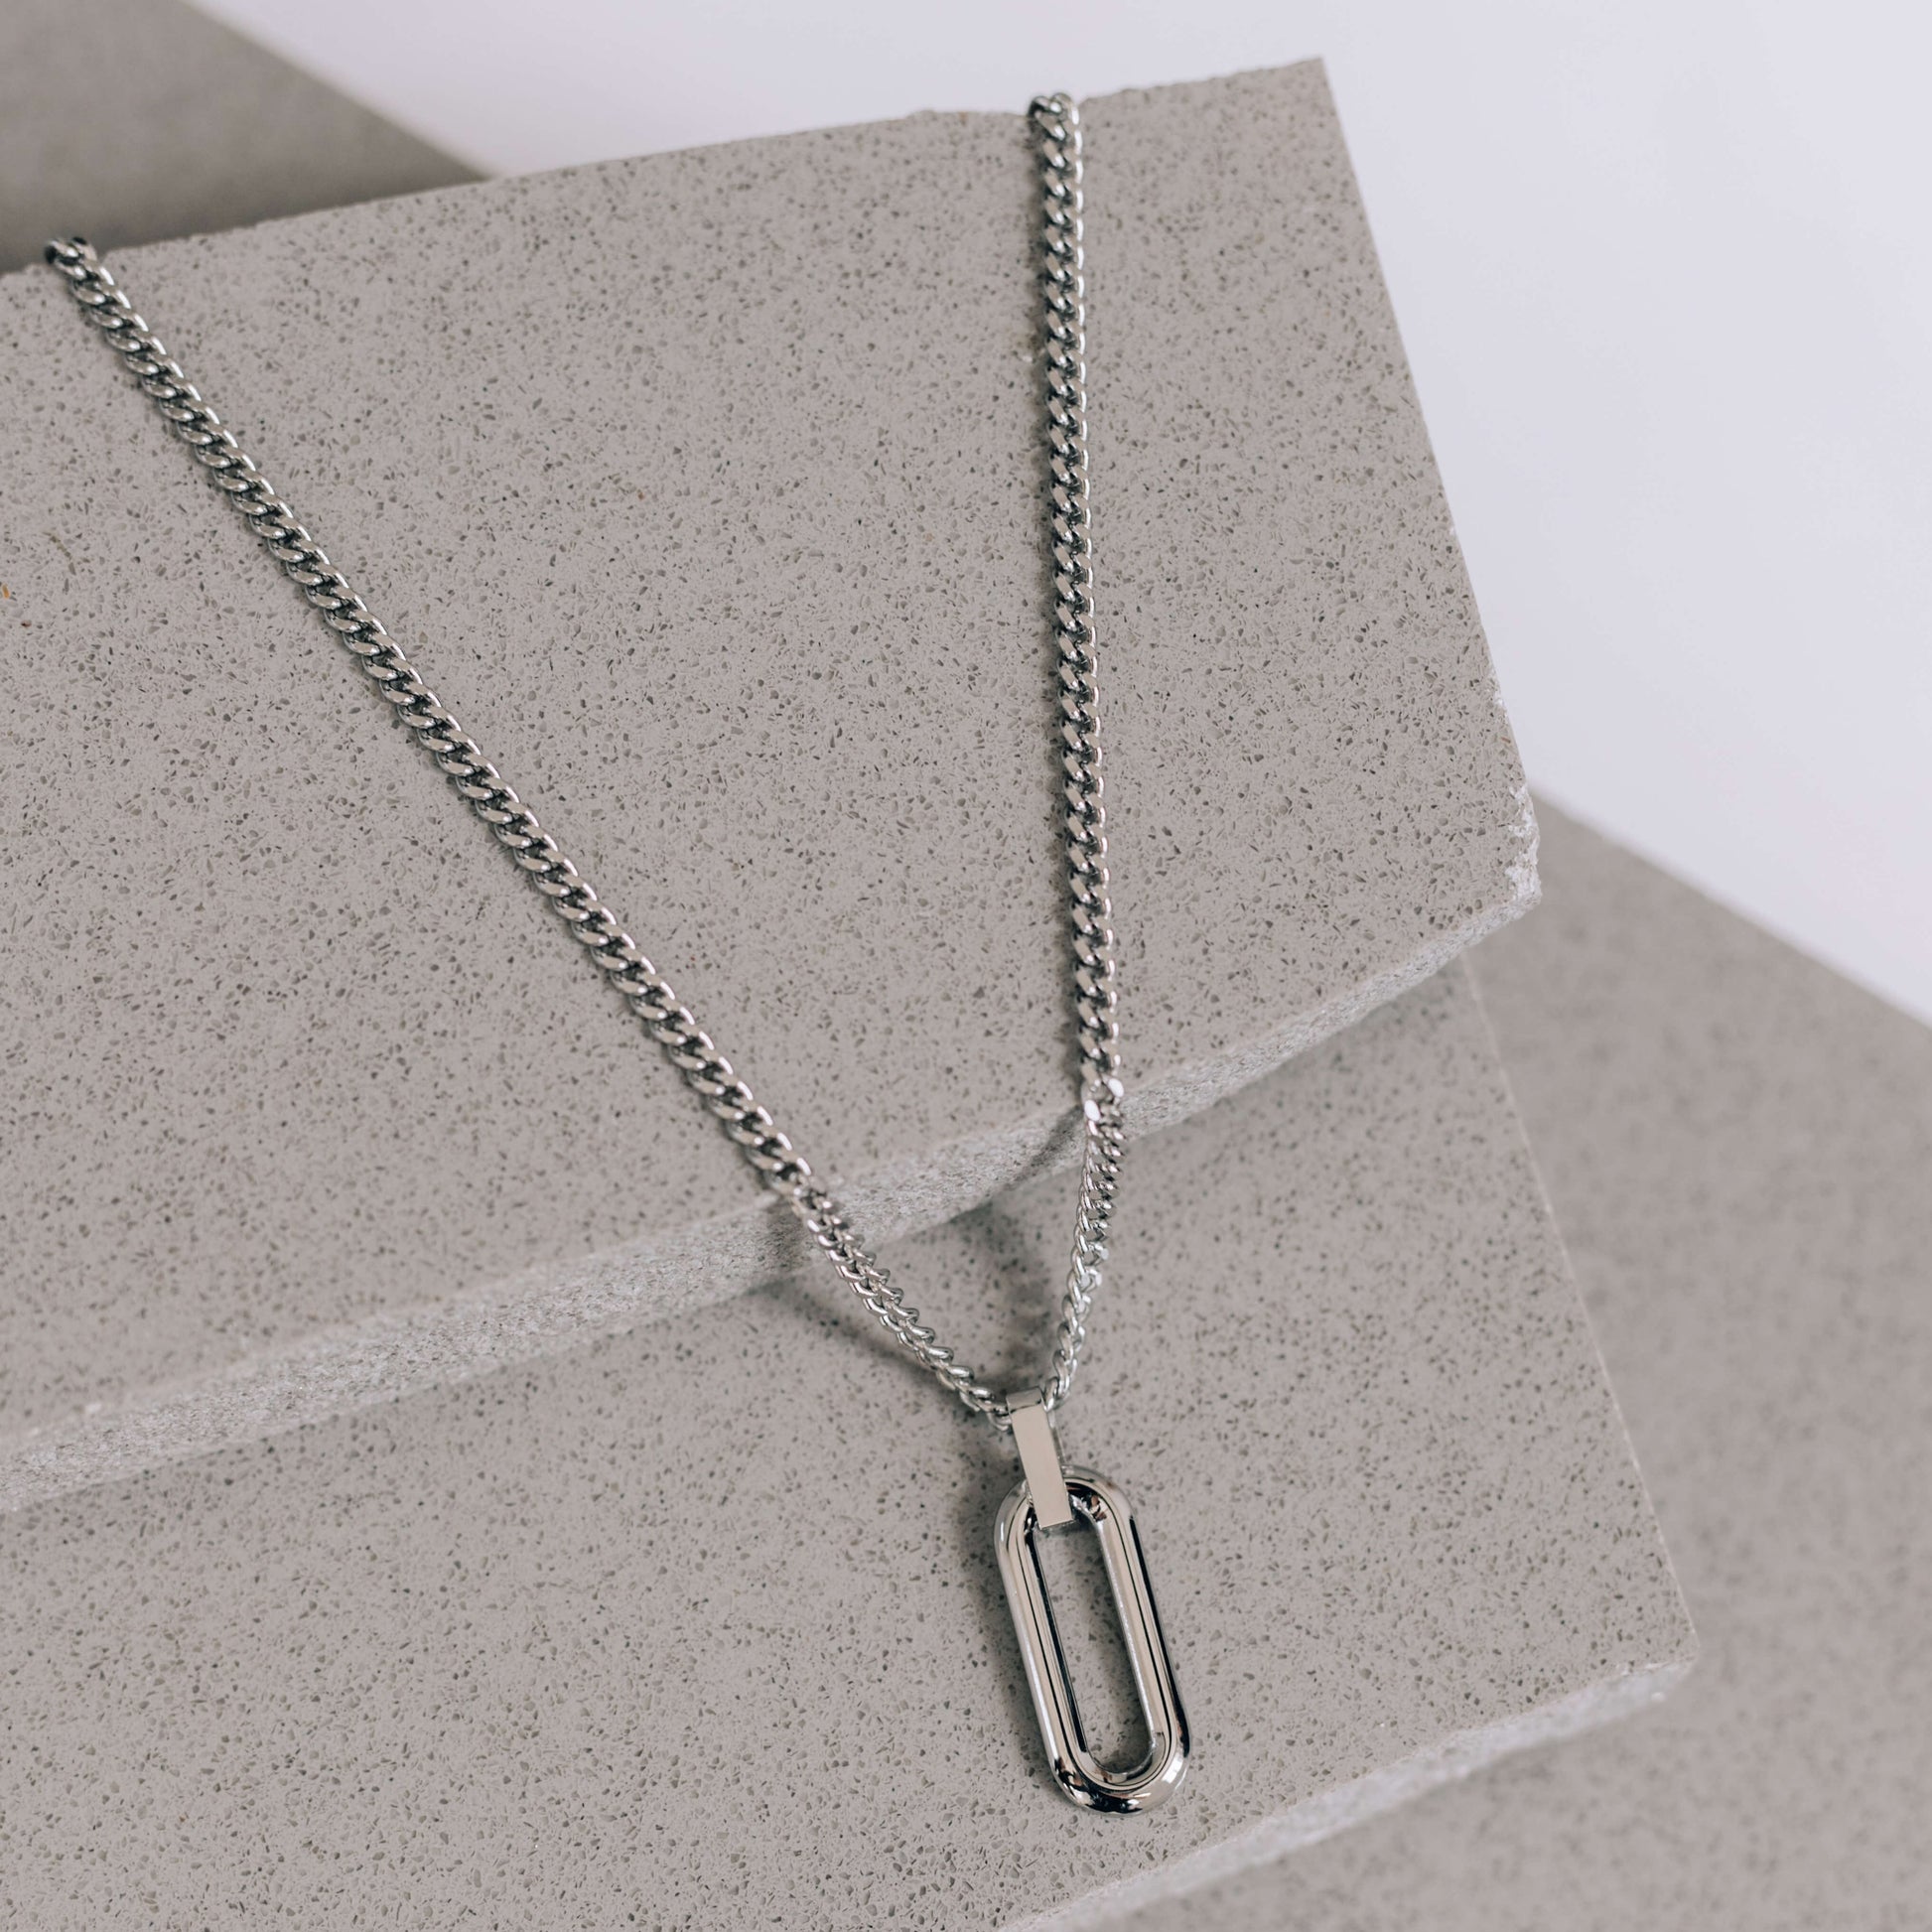 Silver Oval Pendant Necklace 3mm Curb Chain For Men or Women - Boutique Wear RENN - Pendant necklace